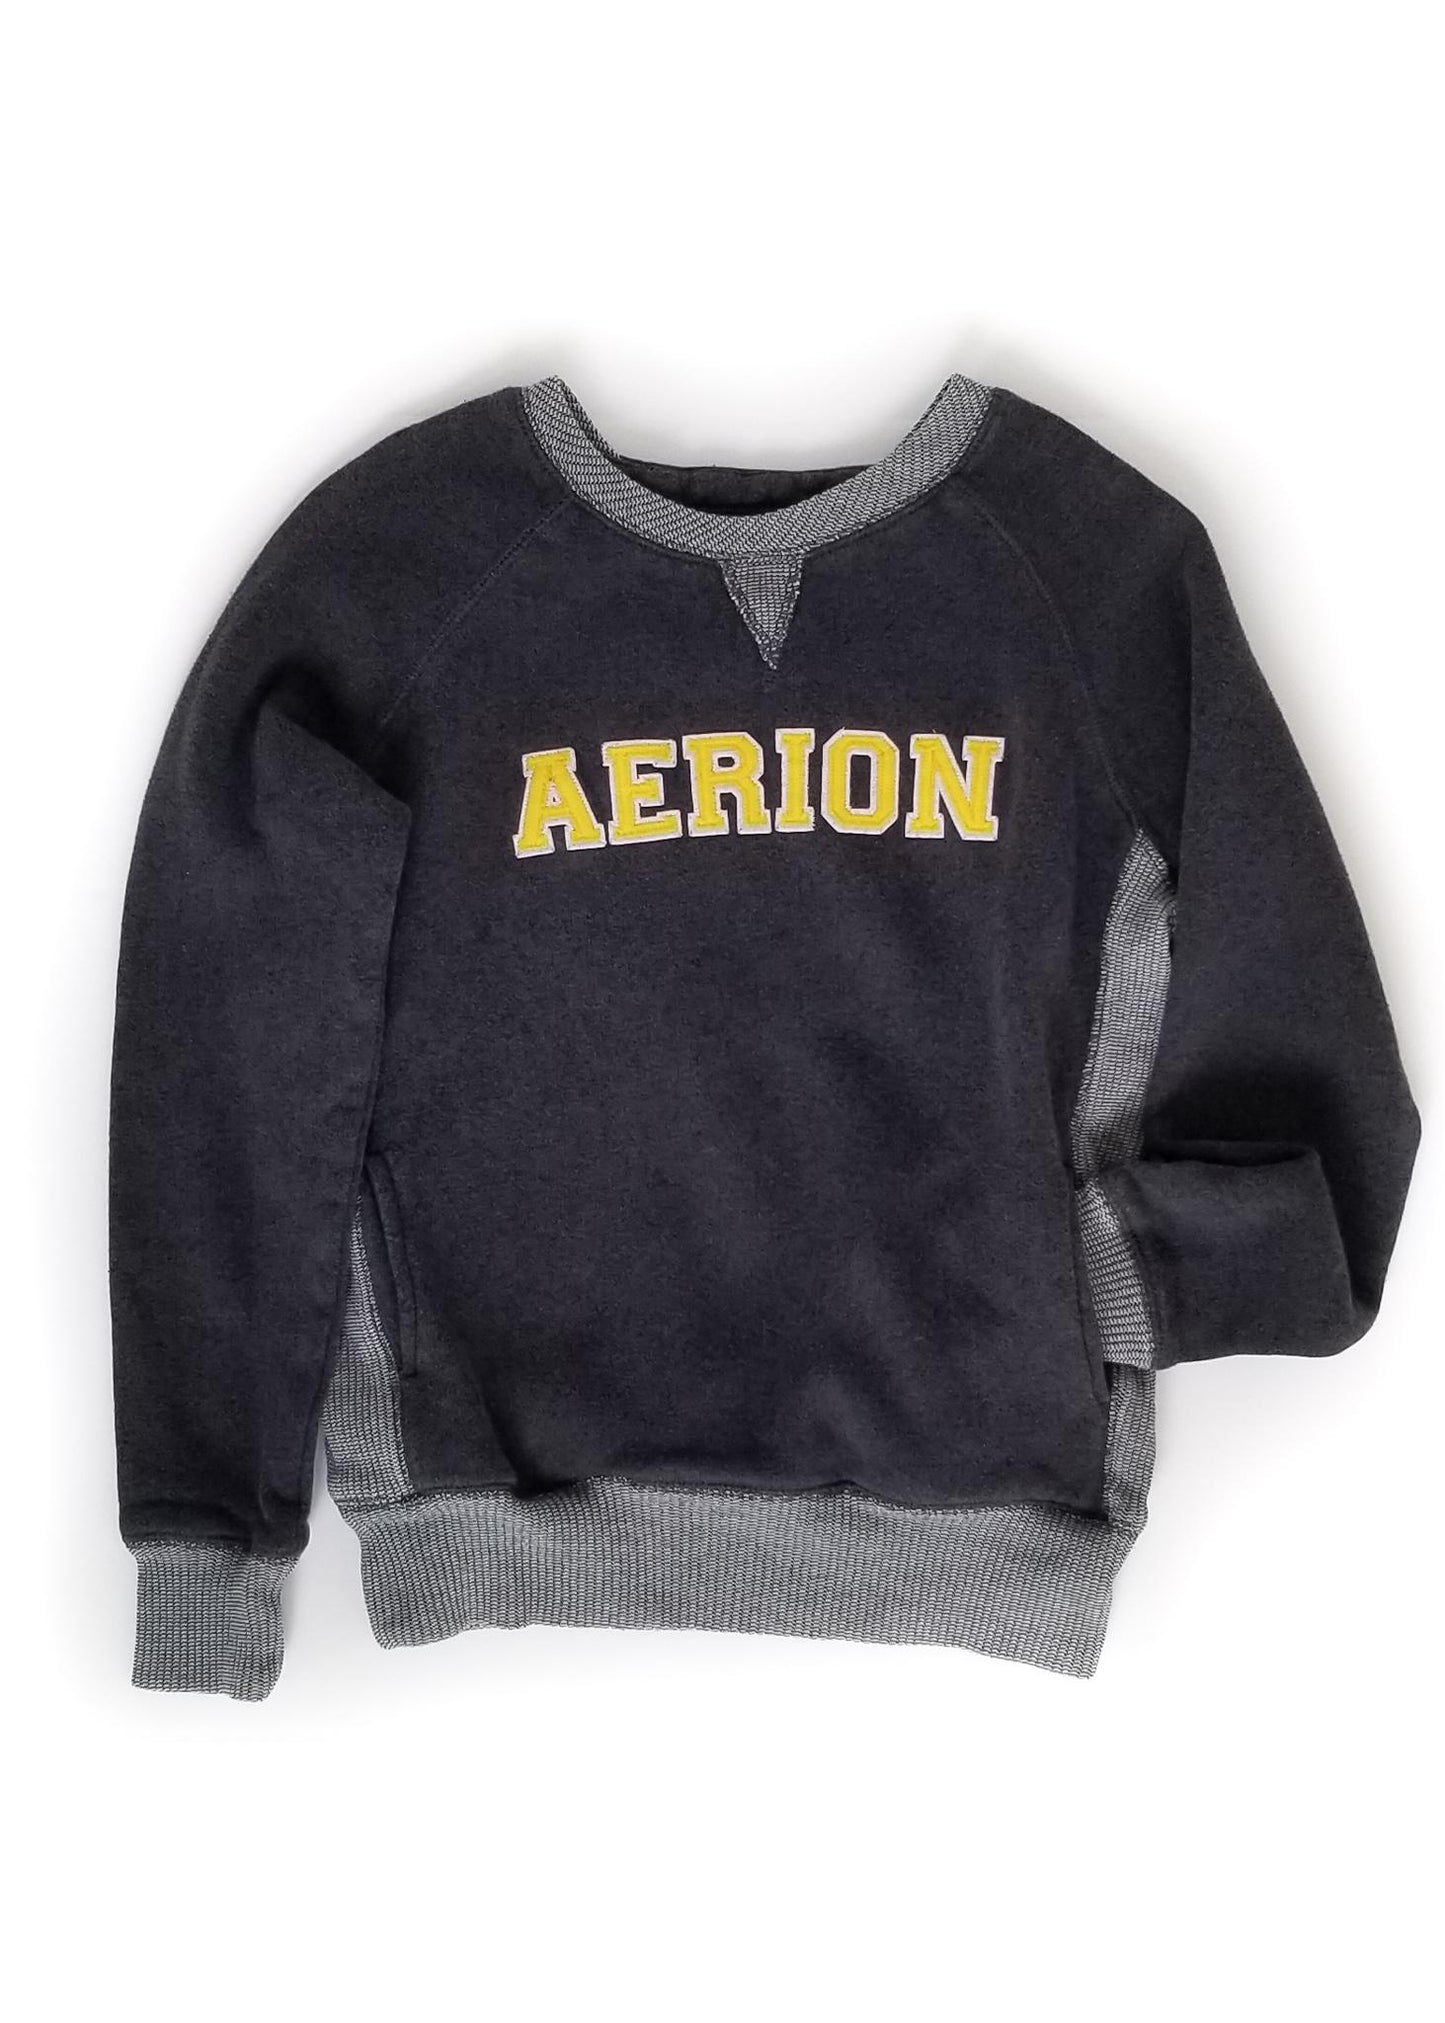 Aerion Crewneck Sweater - Navy - Women's Medium